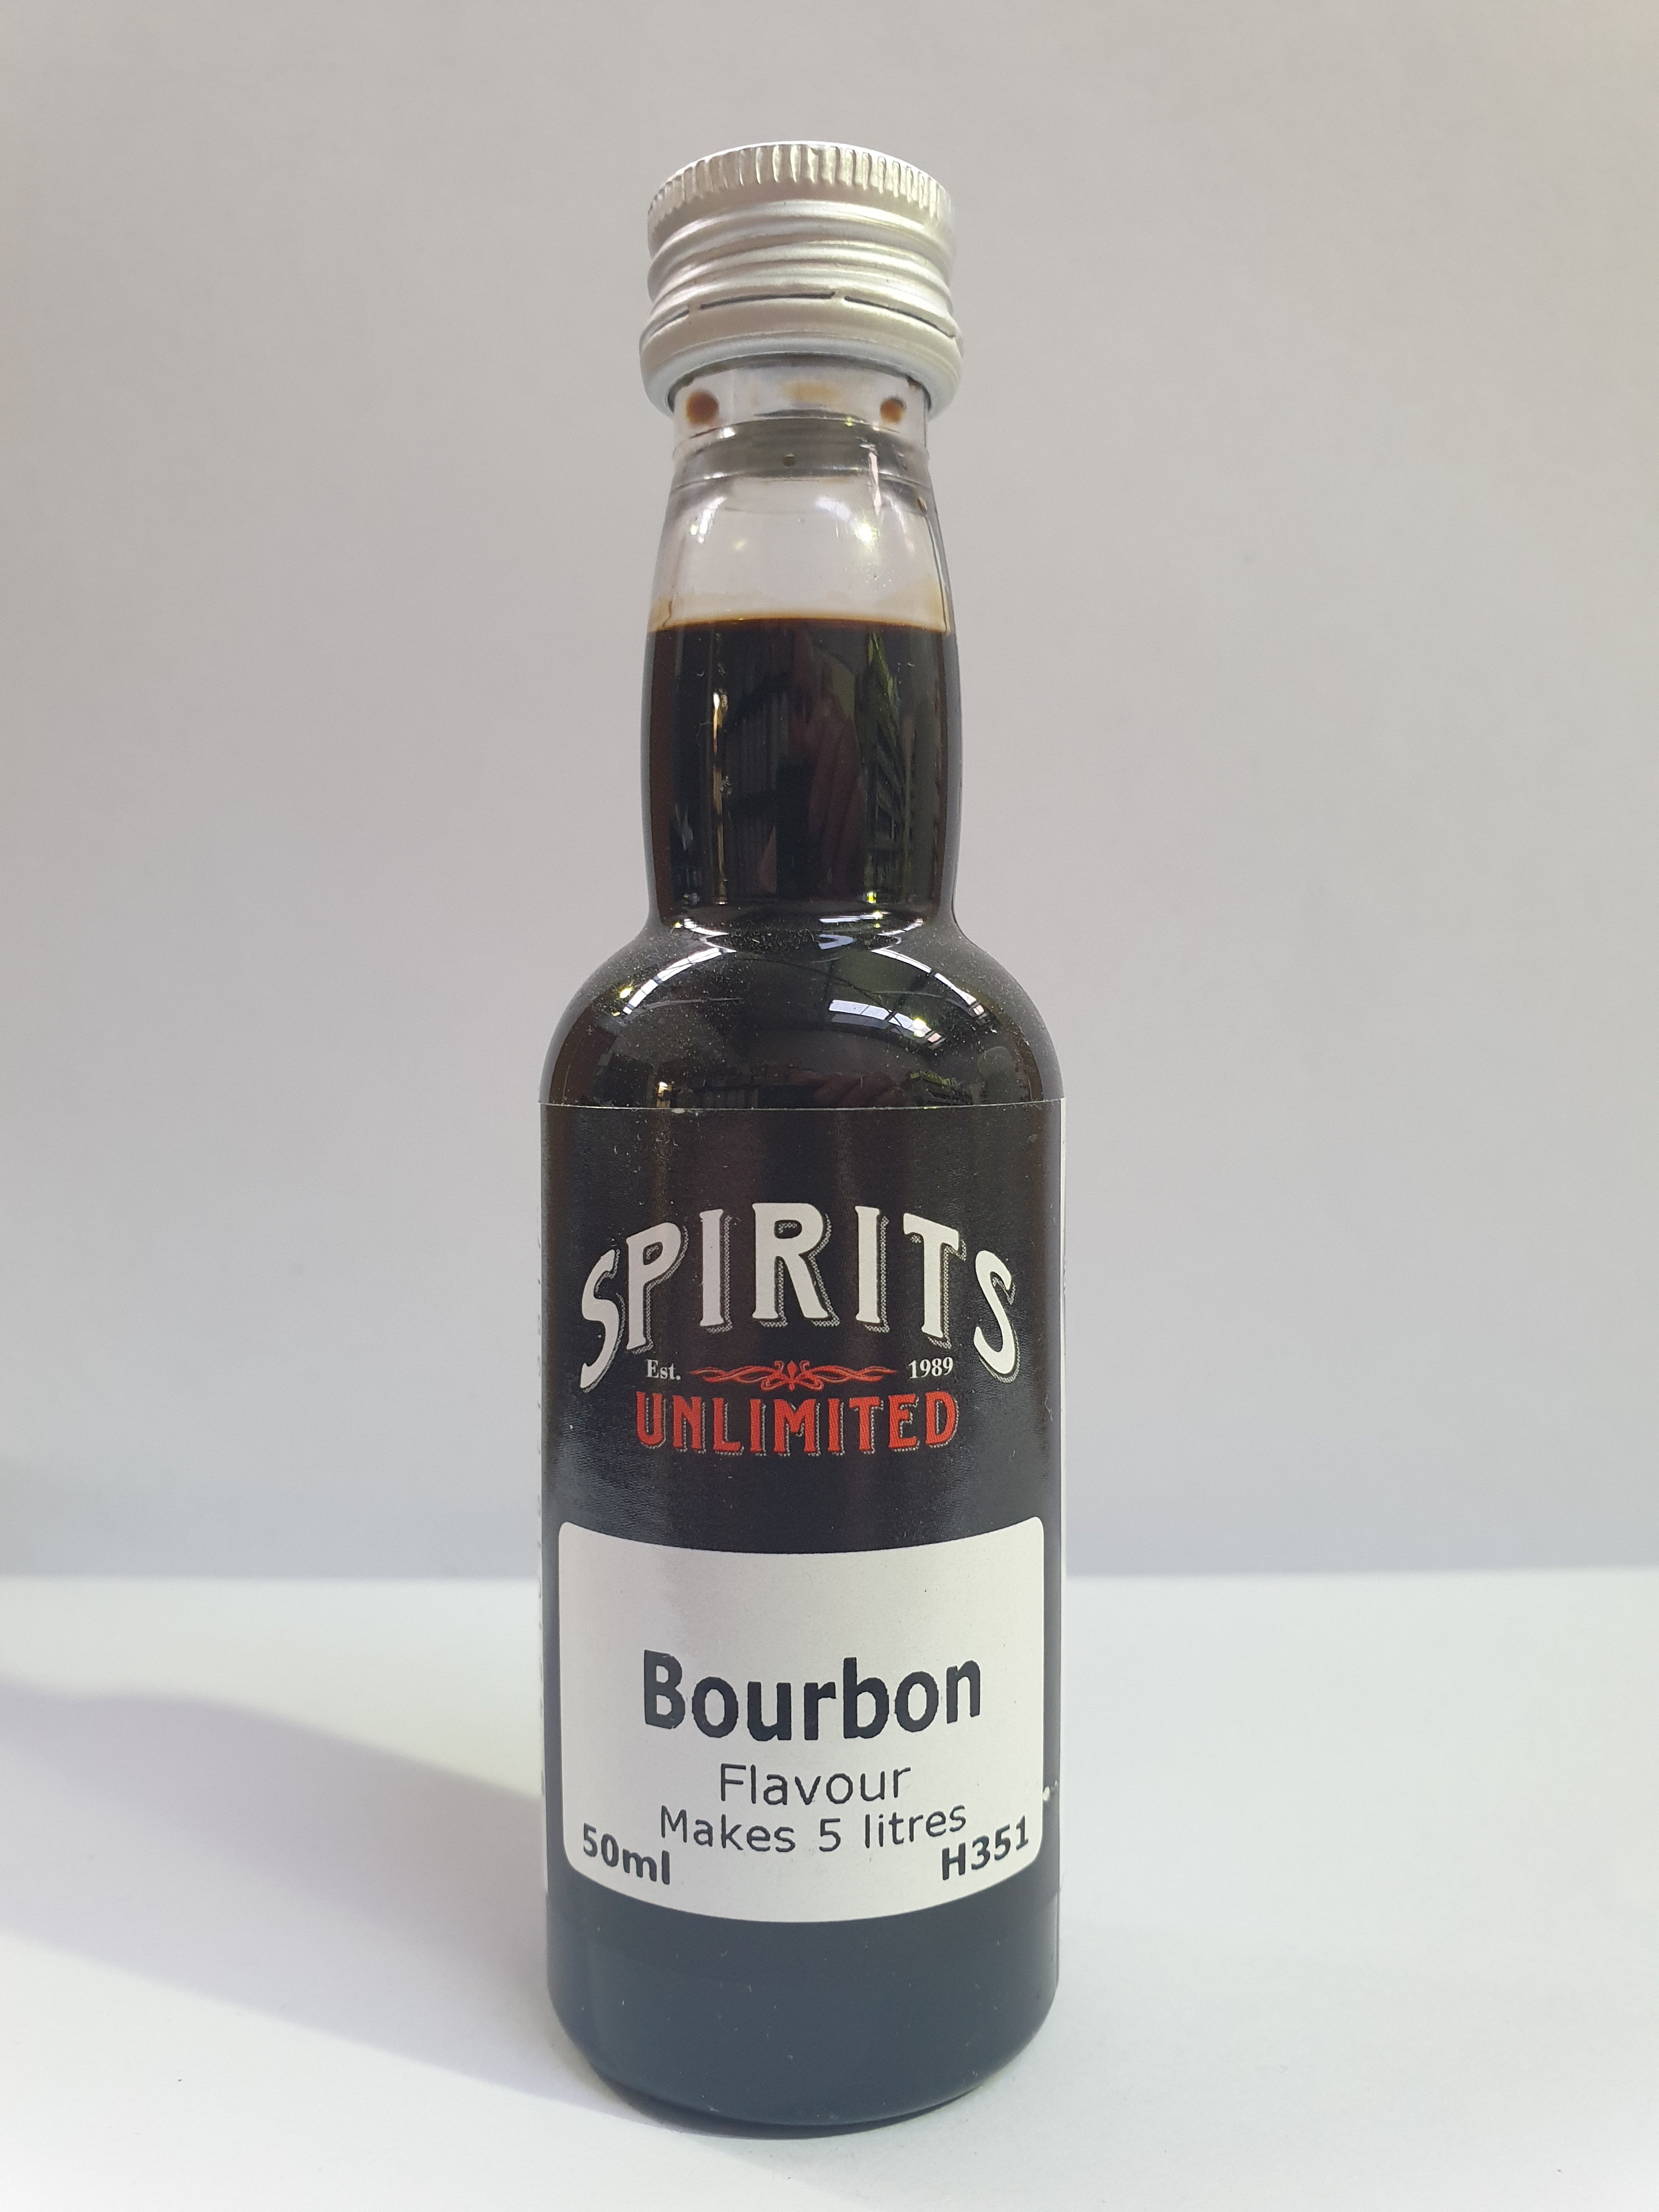 Spirits Unlimited (Straight) Bourbon (H351)